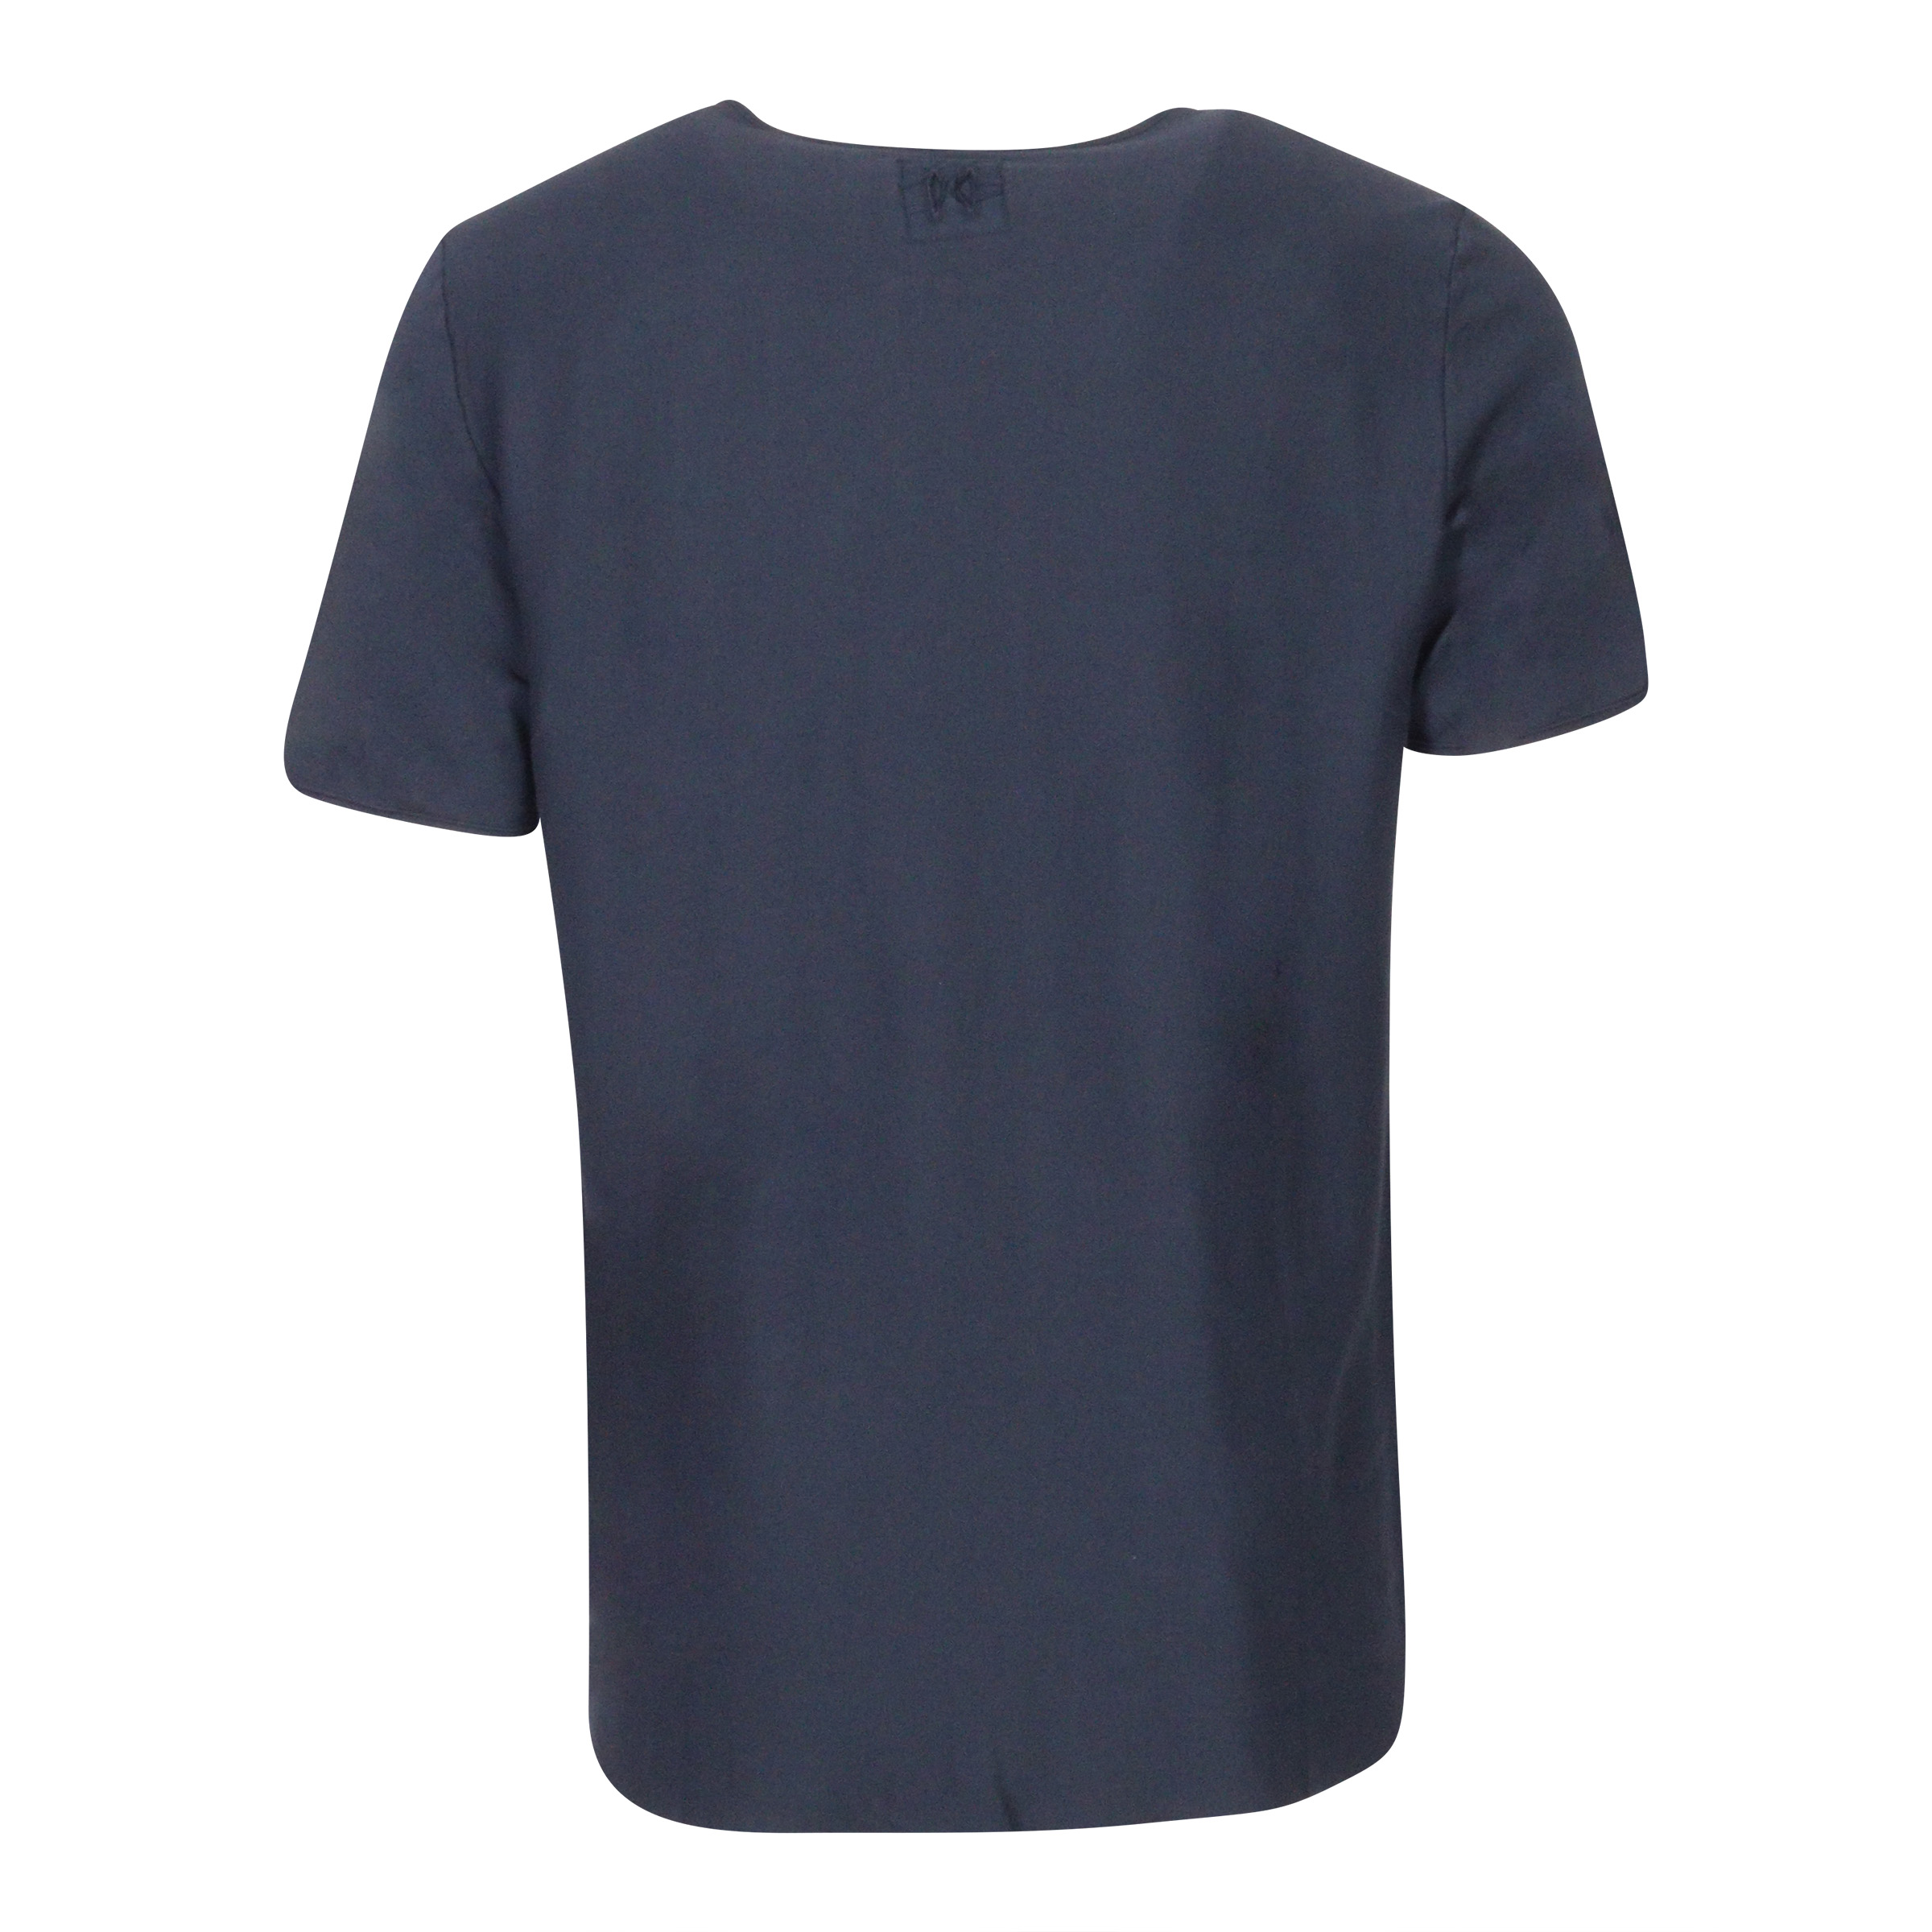 Hannes Roether T-Shirt Dark Blue